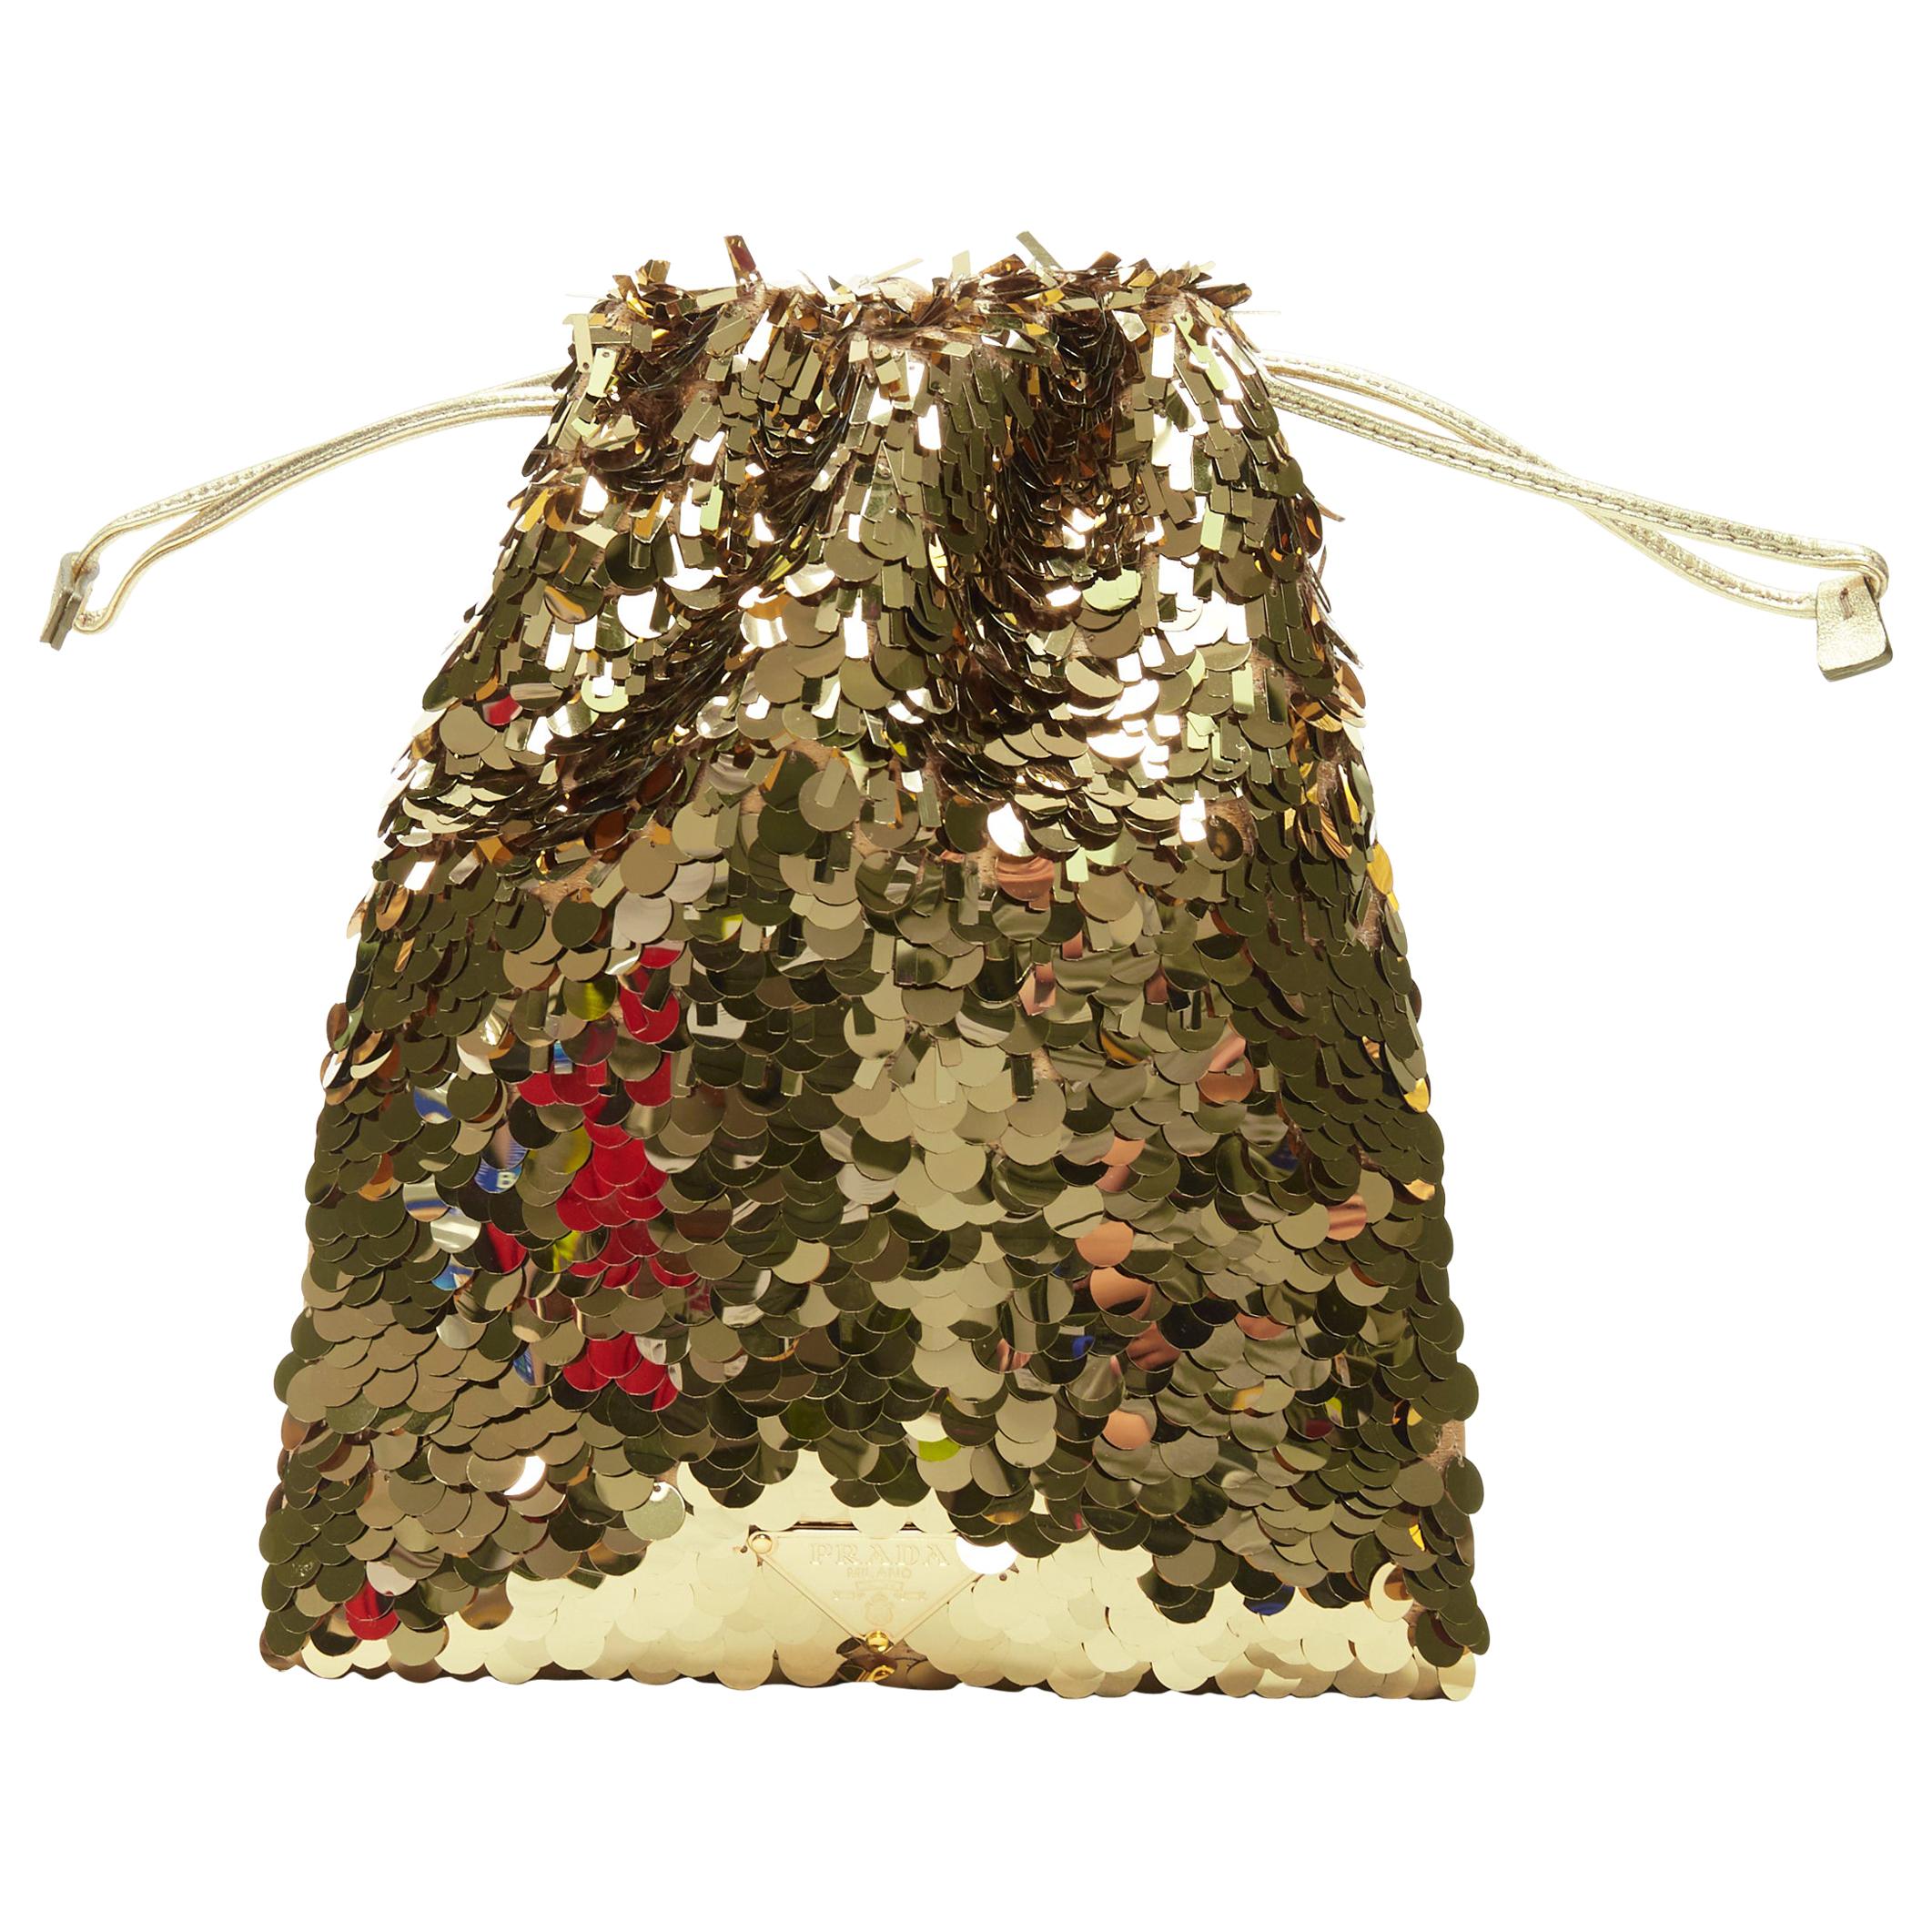 PRADA gold pailette sequins embellished drawstring pouch evening party bag